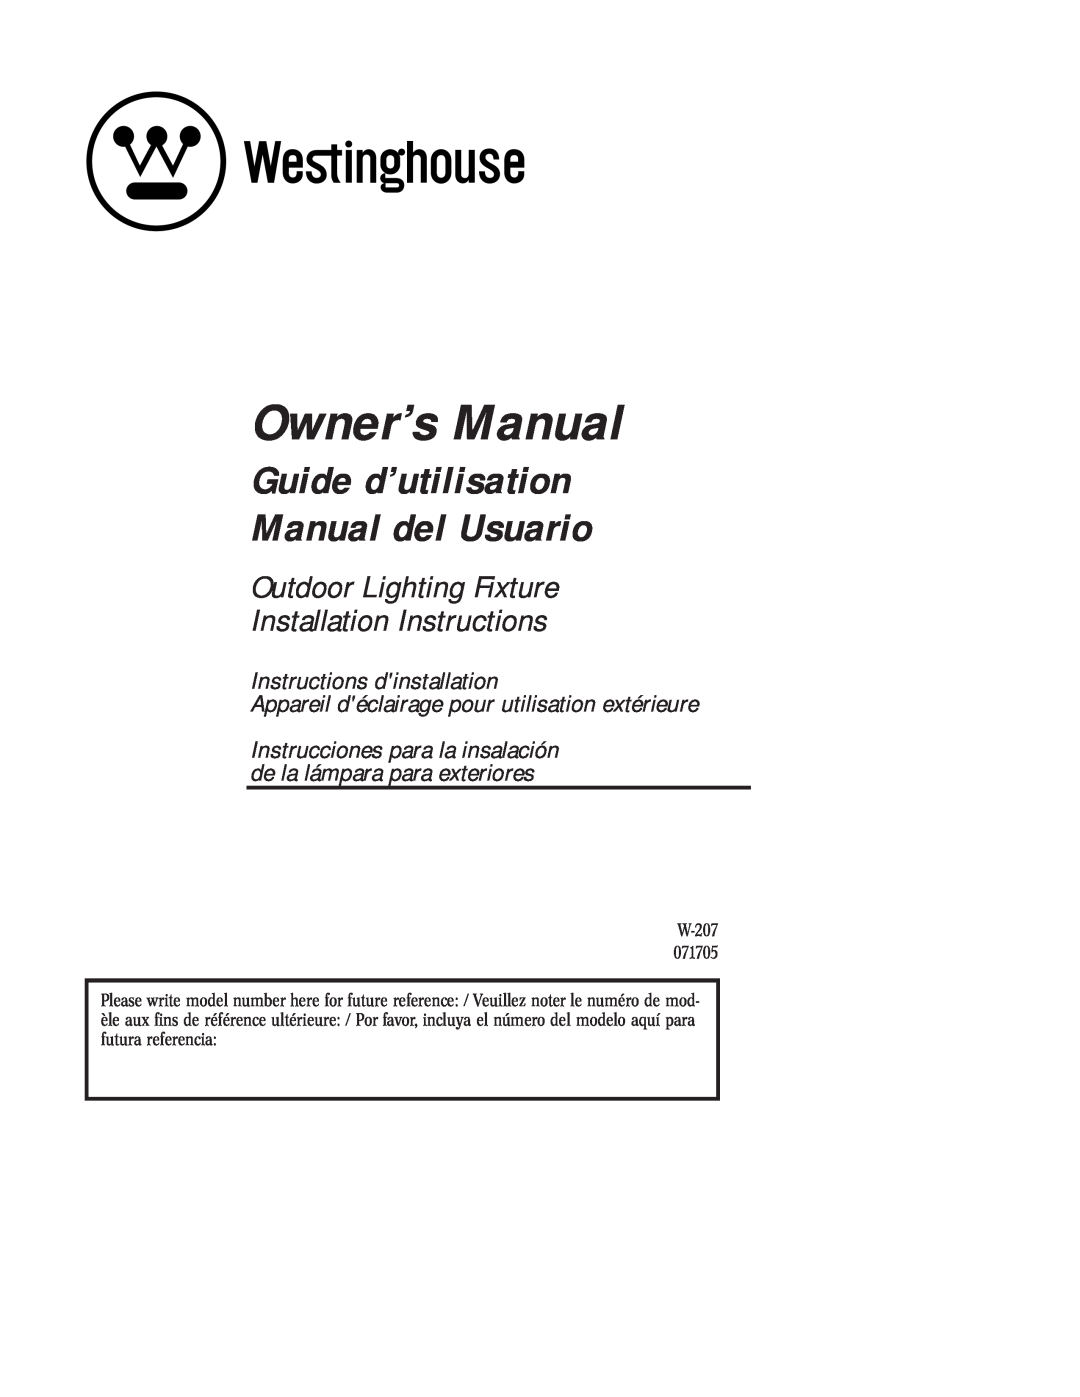 Westinghouse W-207 071705 owner manual Guide d’utilisation Manual del Usuario, Instructions dinstallation 